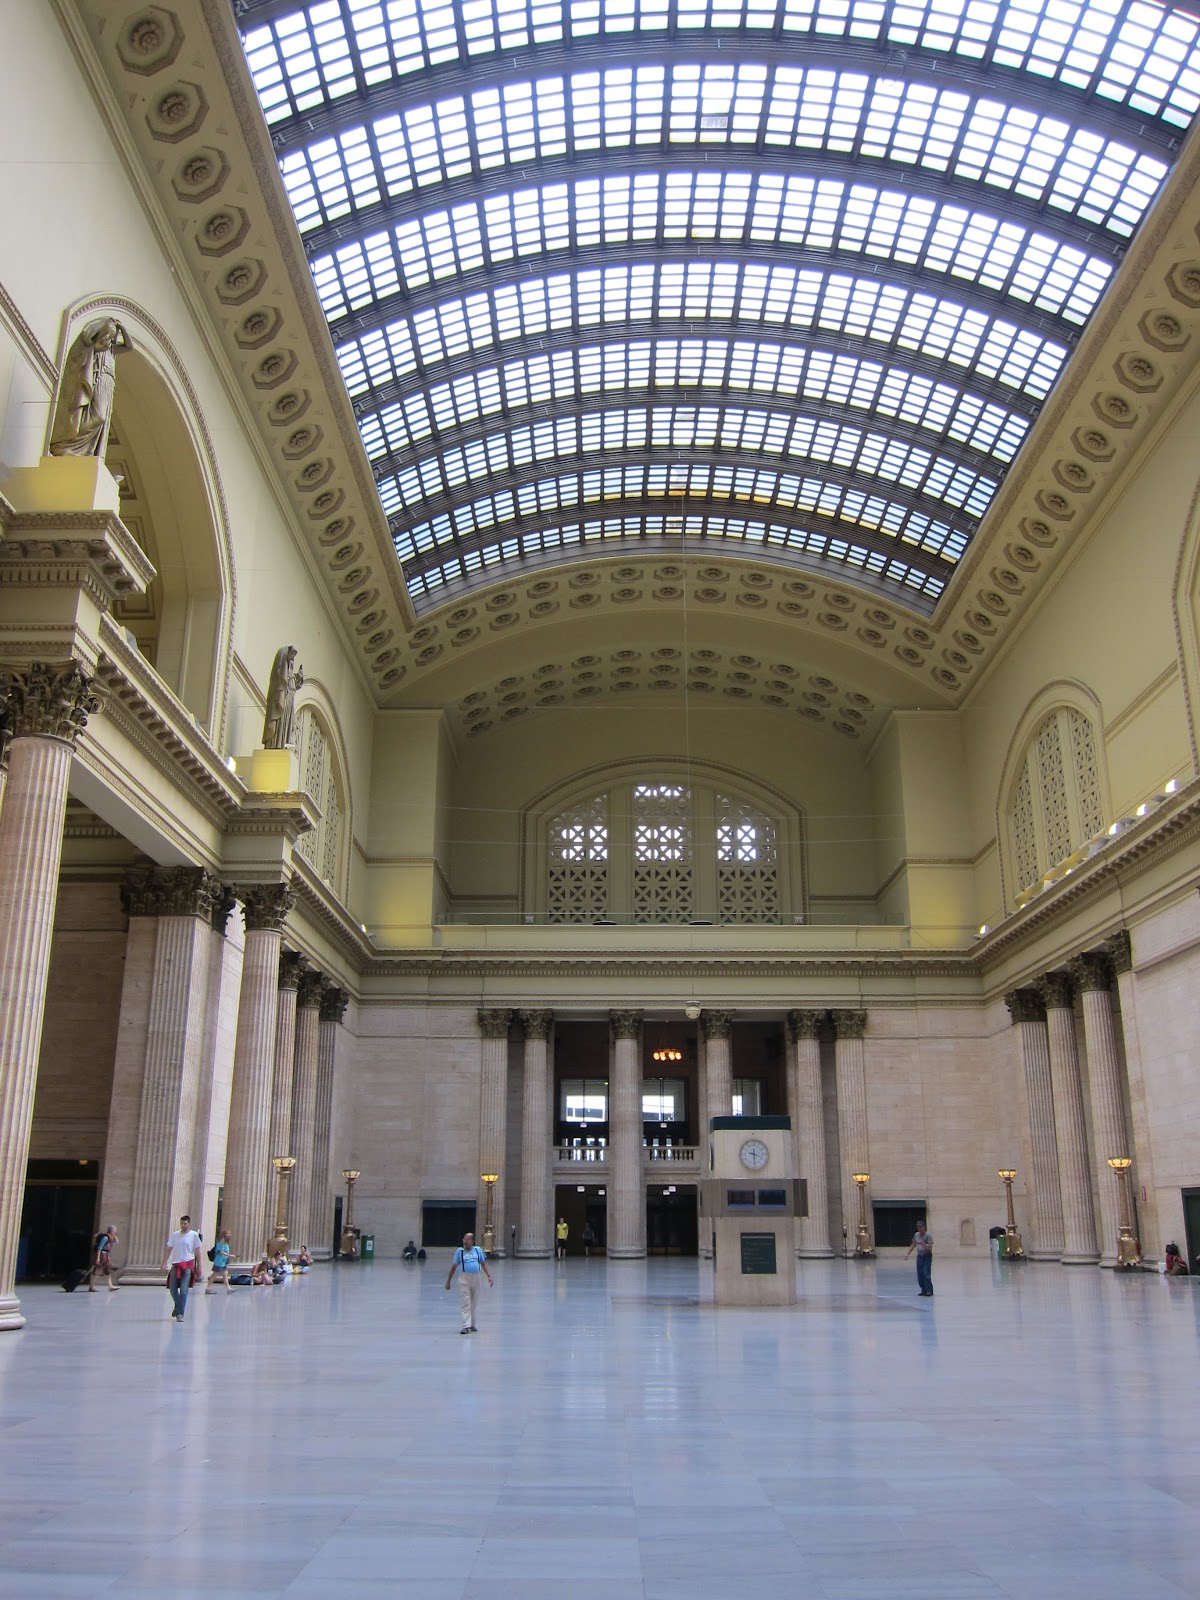 transpress nz: Chicago Union Station